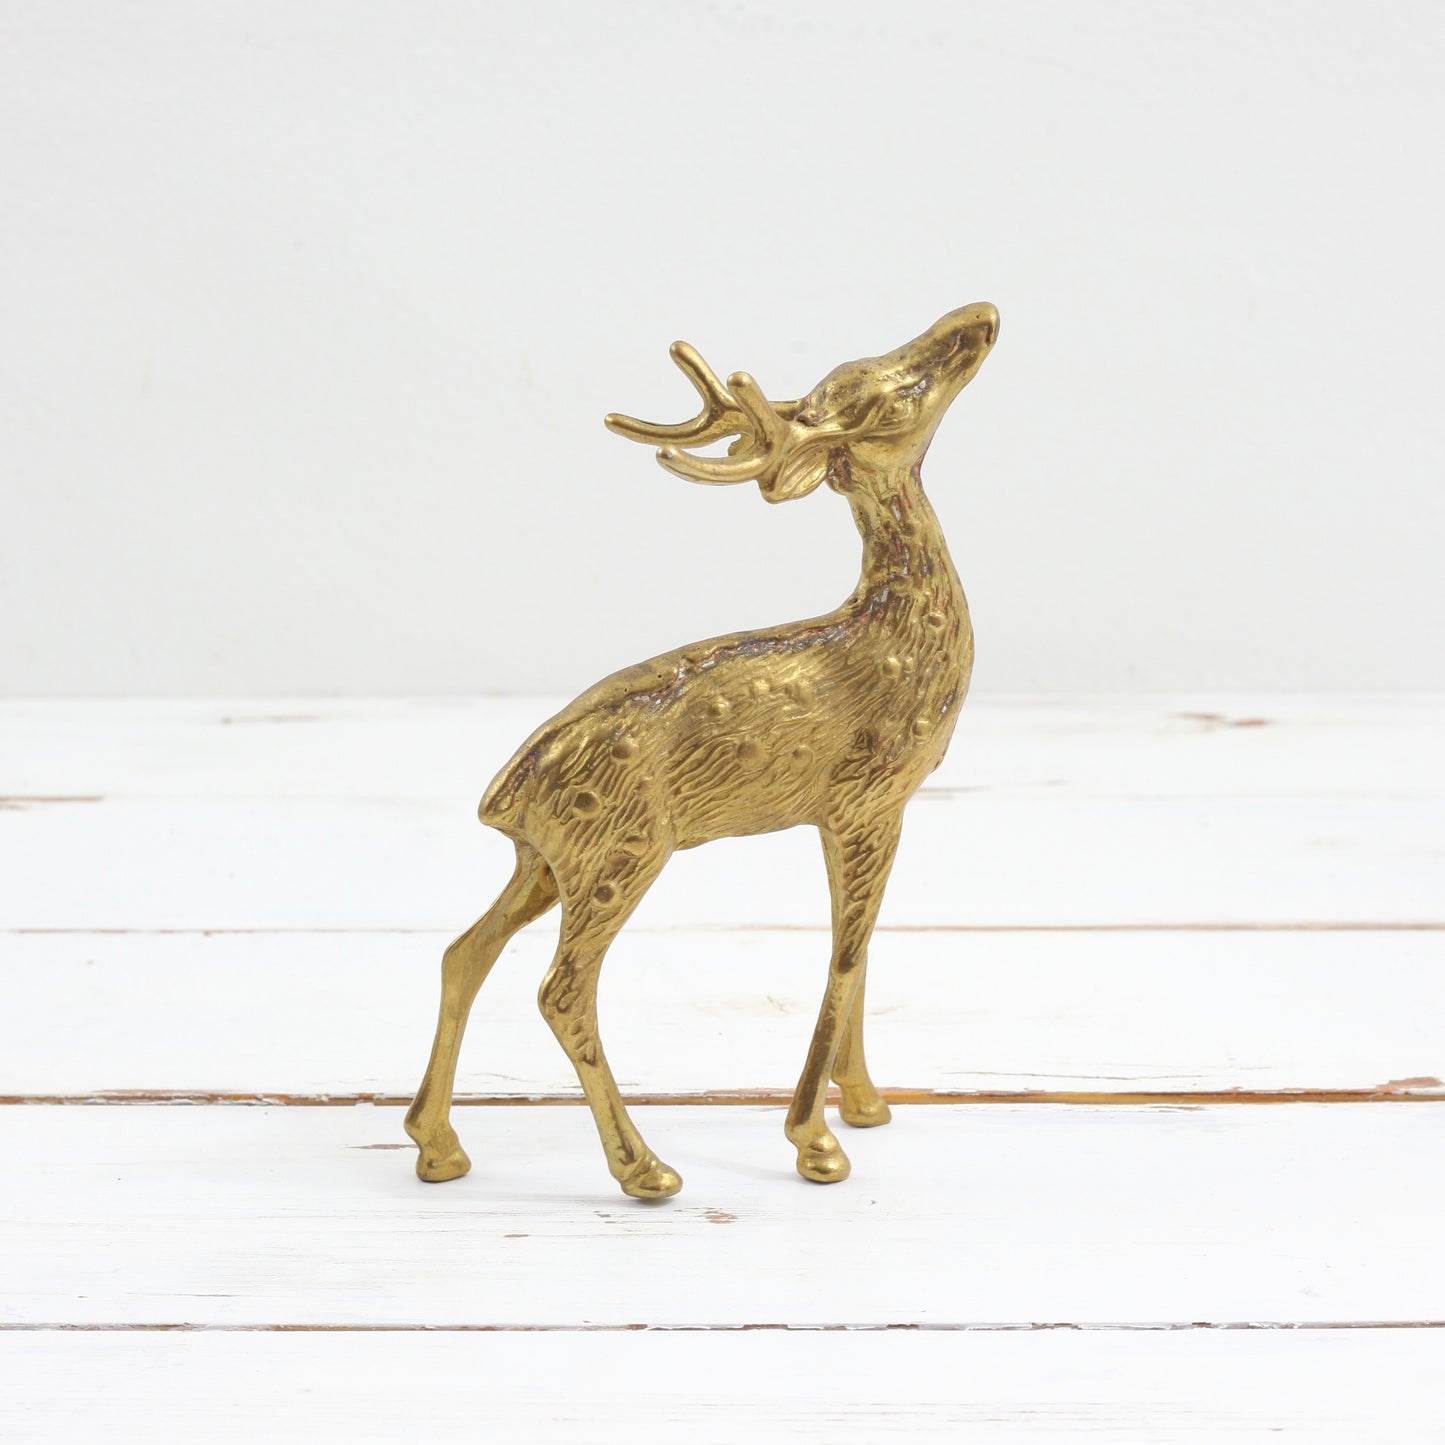 SOLD - Mid Century Modern Brass Deer Pair